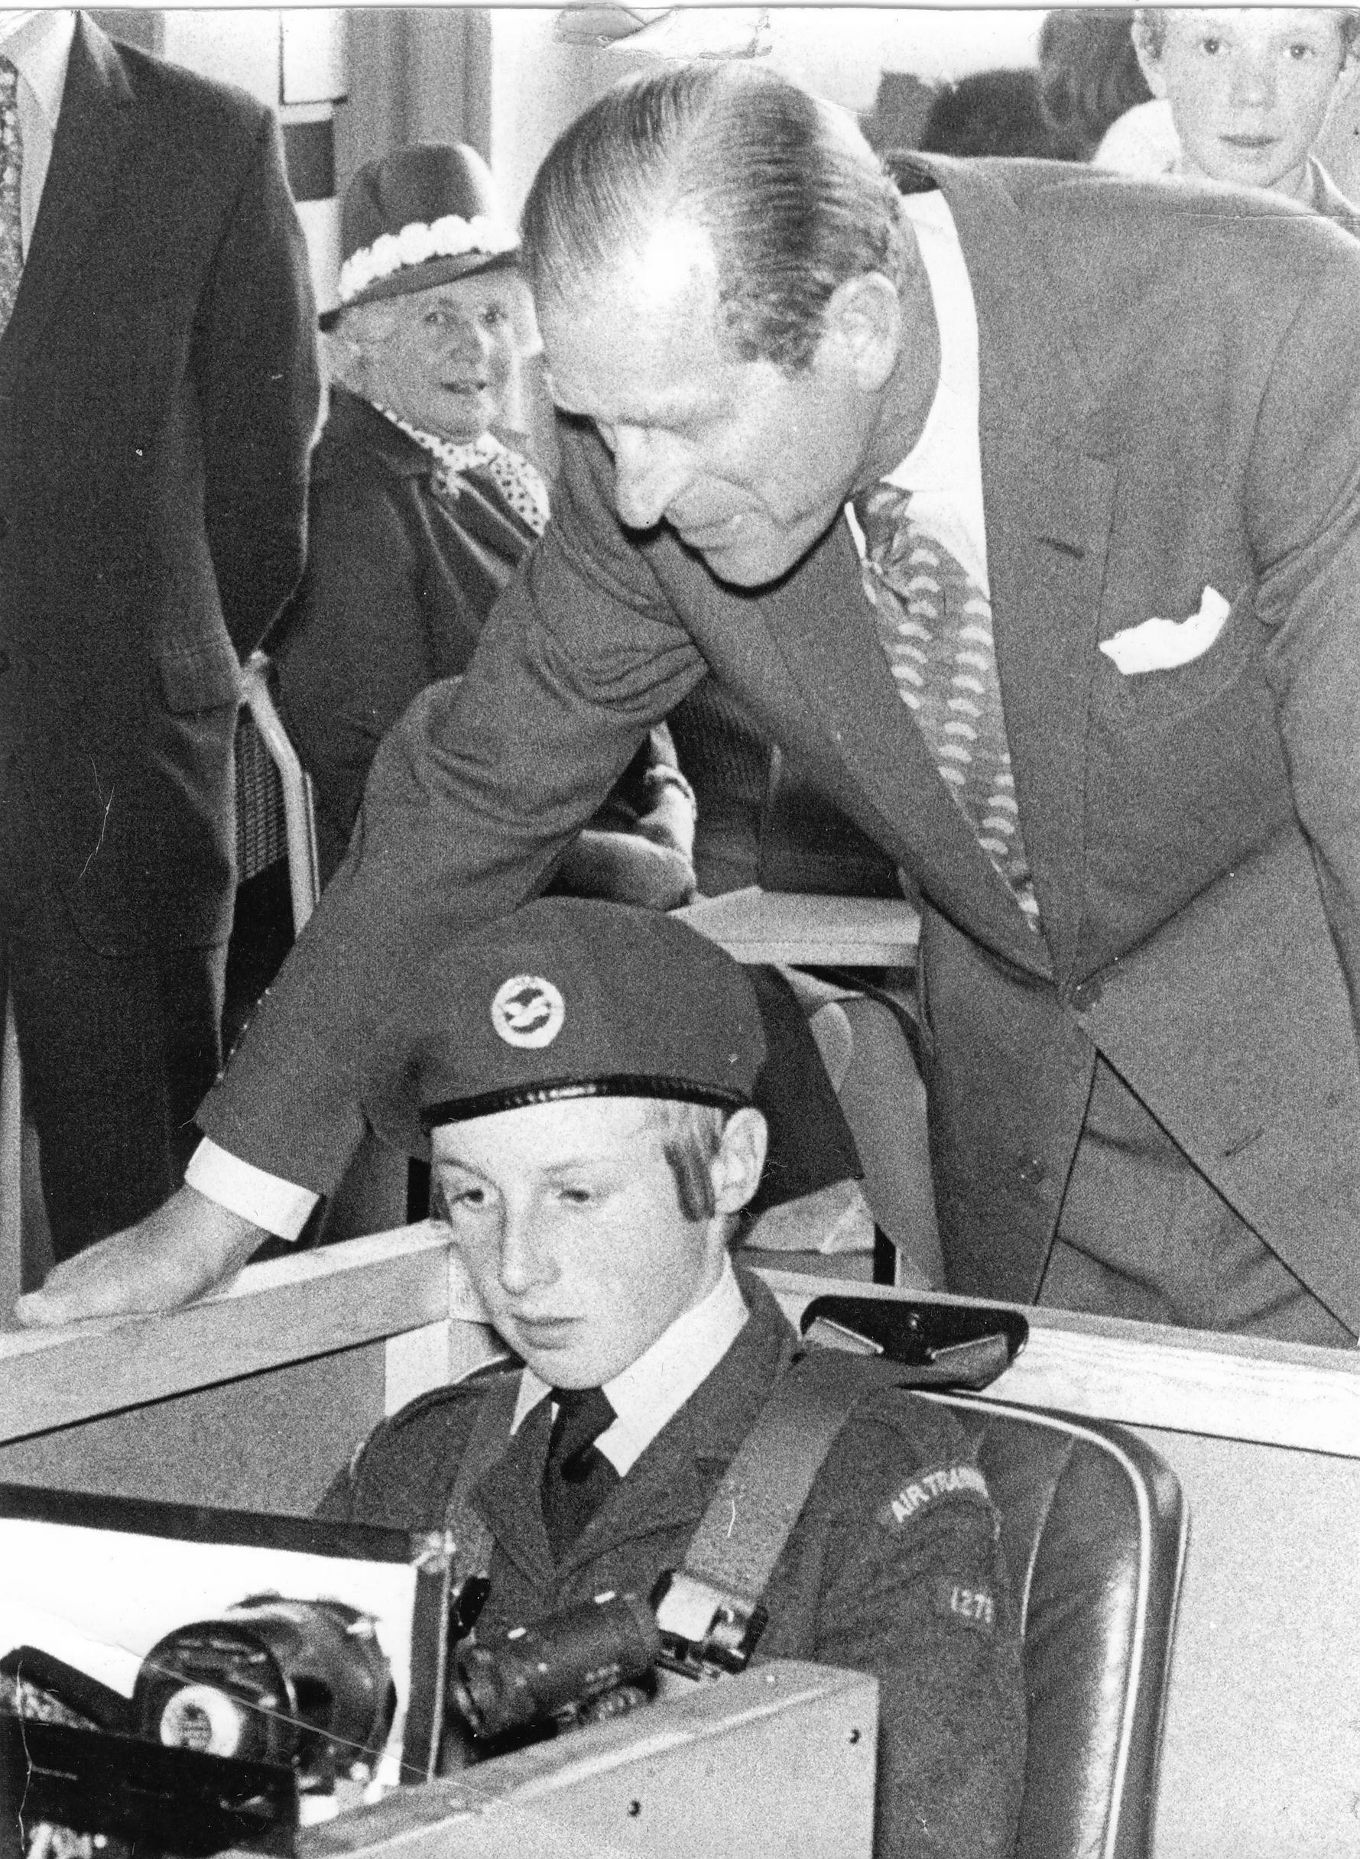 Image shows HRH The Prince Philip, Duke of Edinburgh meeting RAF Air Cadets.